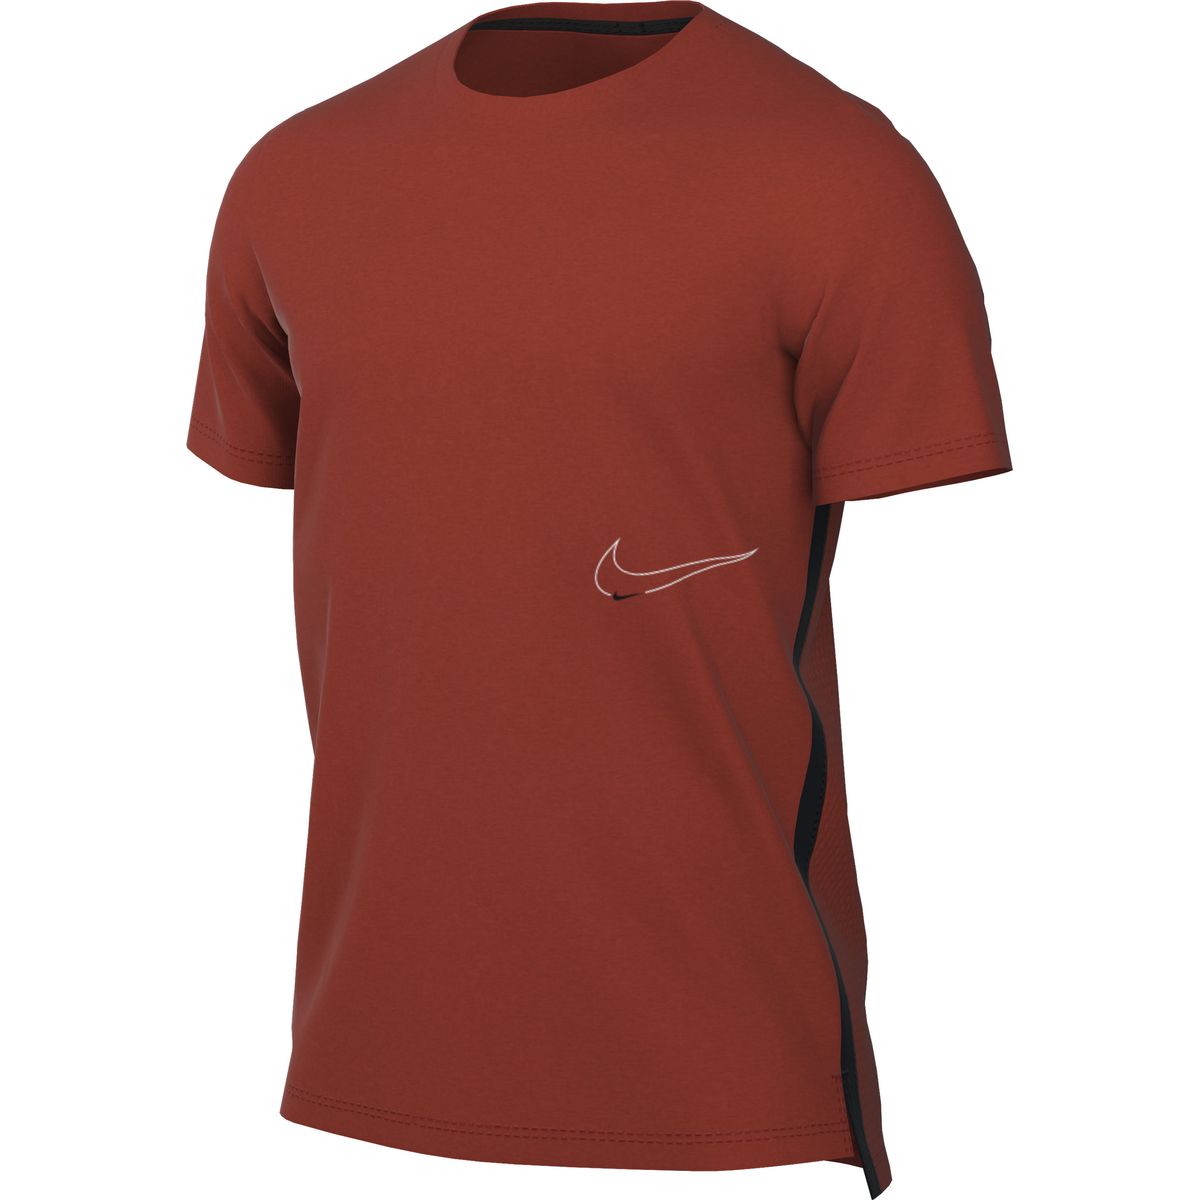 Nike Dri-FIT Training Top Herren T-Shirt